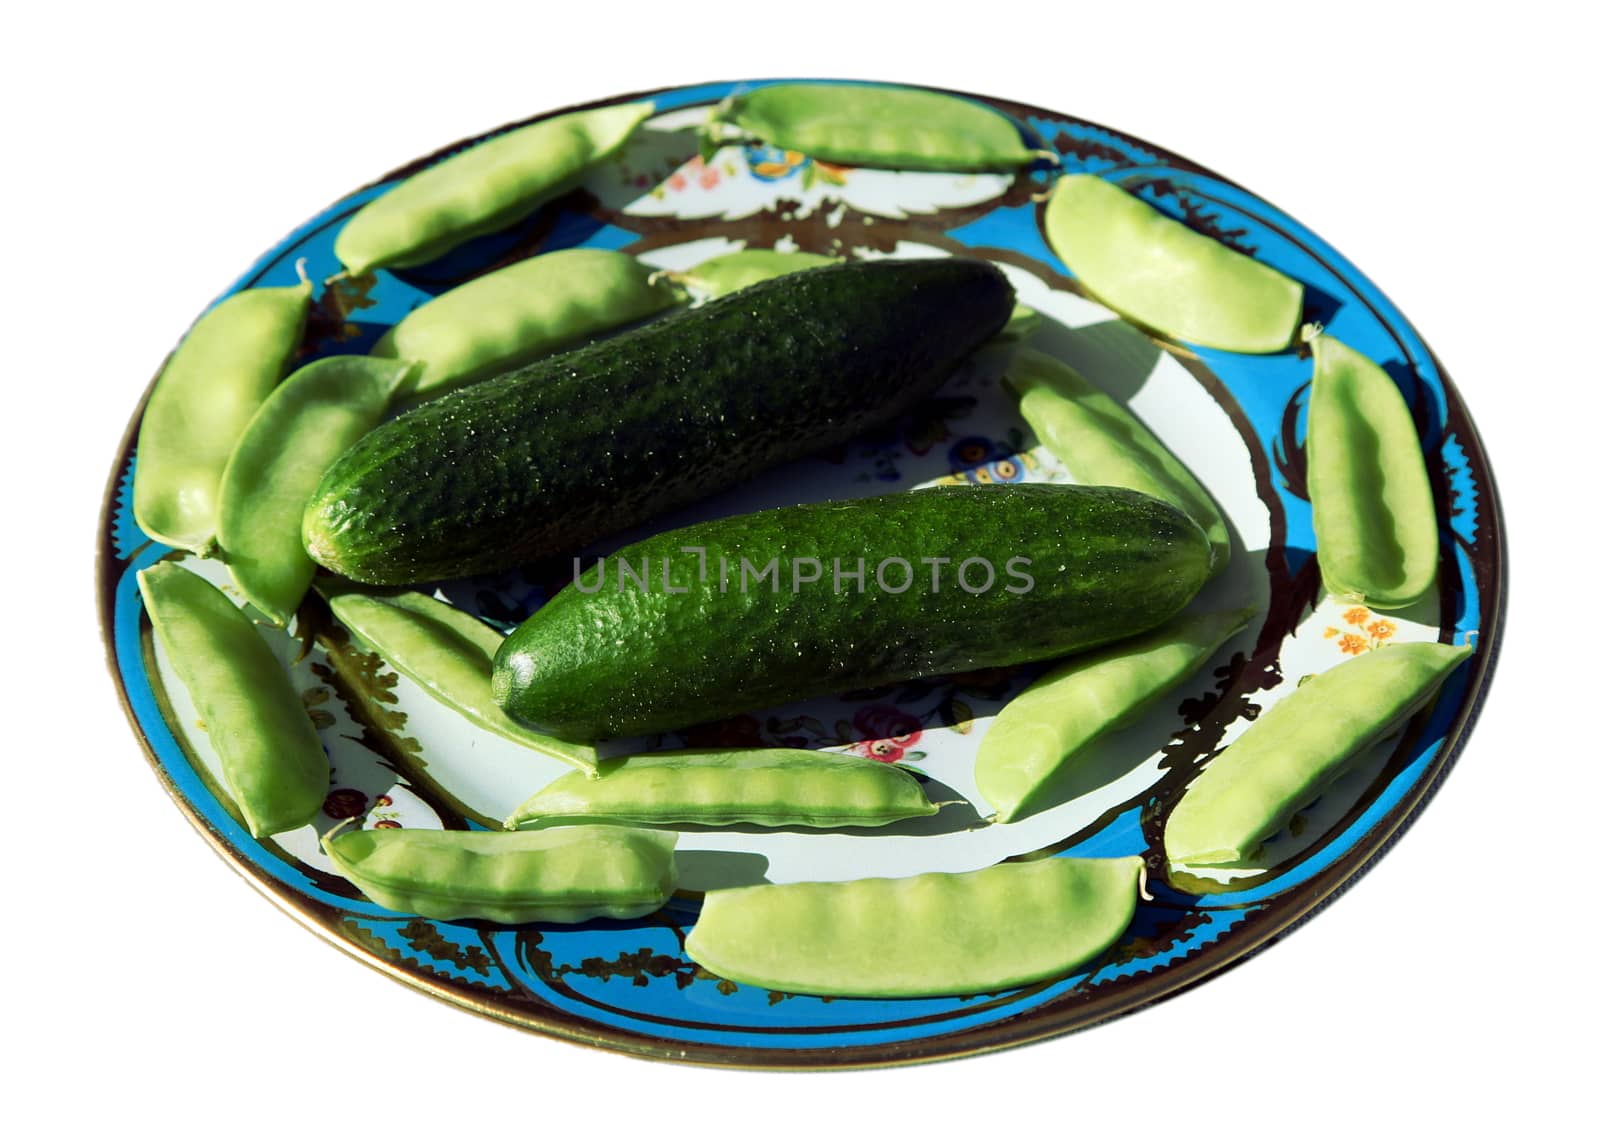 Peas and cucumbers by sundaune